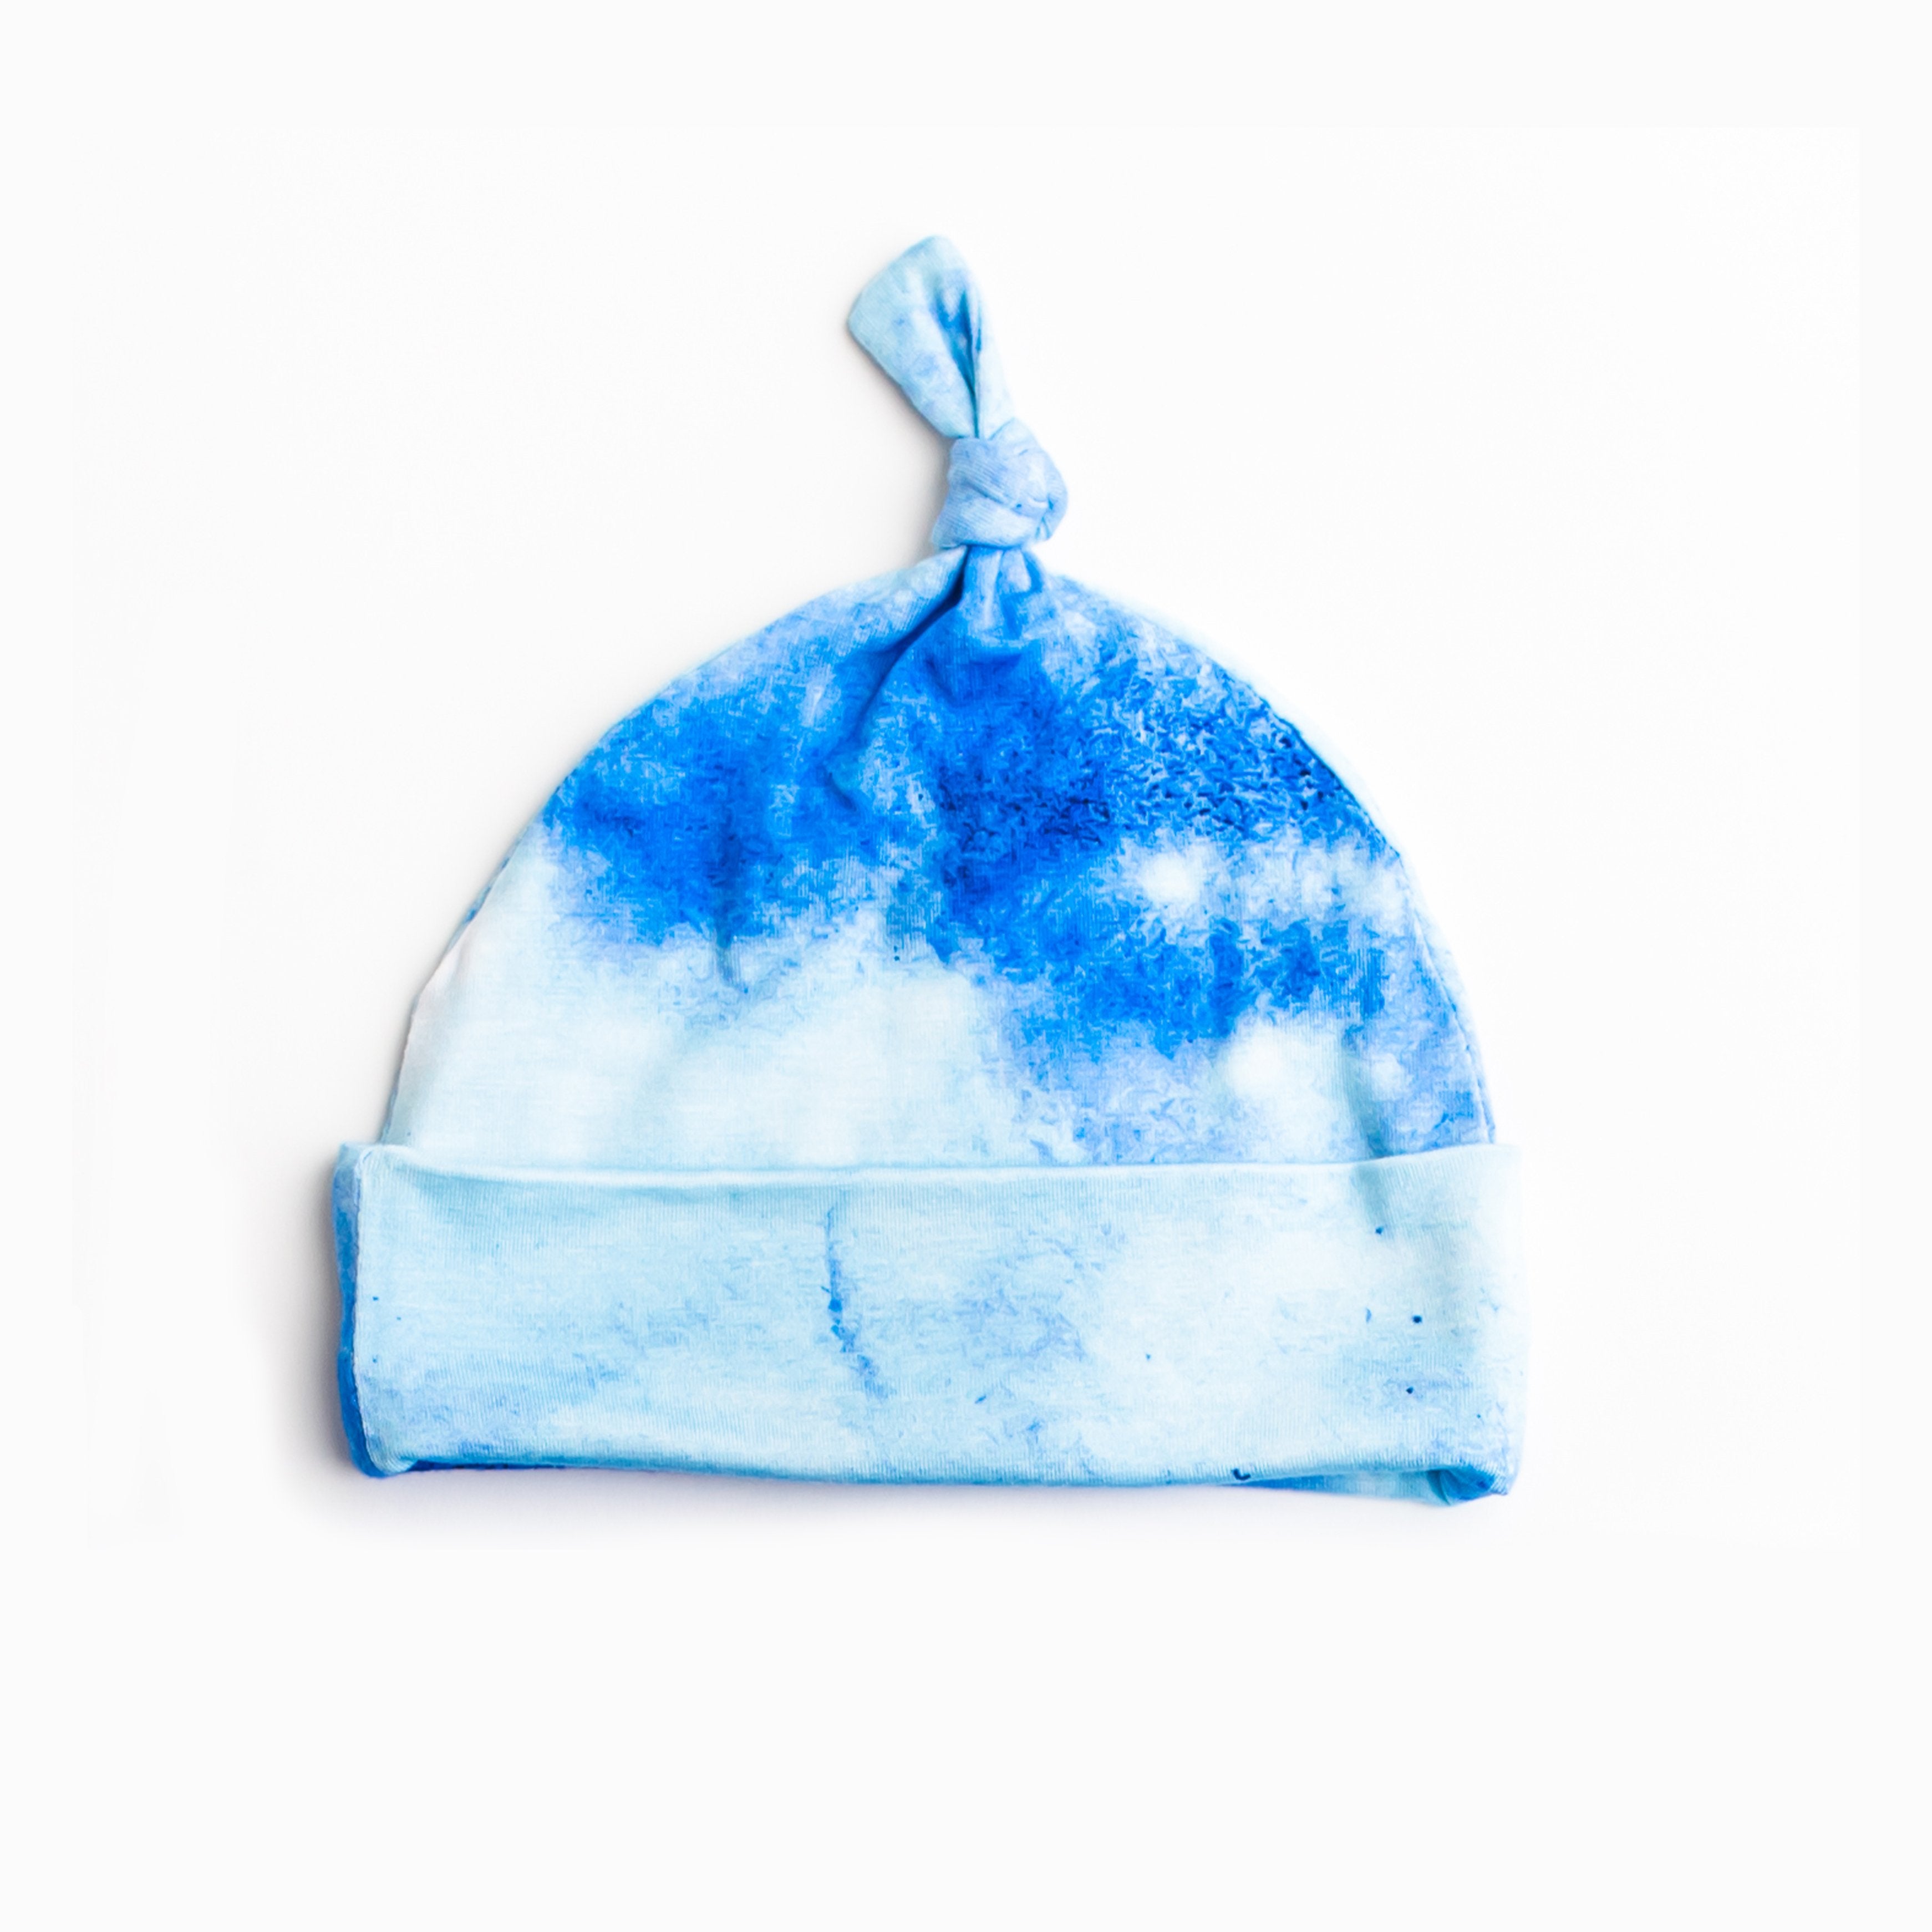 Beanie - Powder Blue Infant